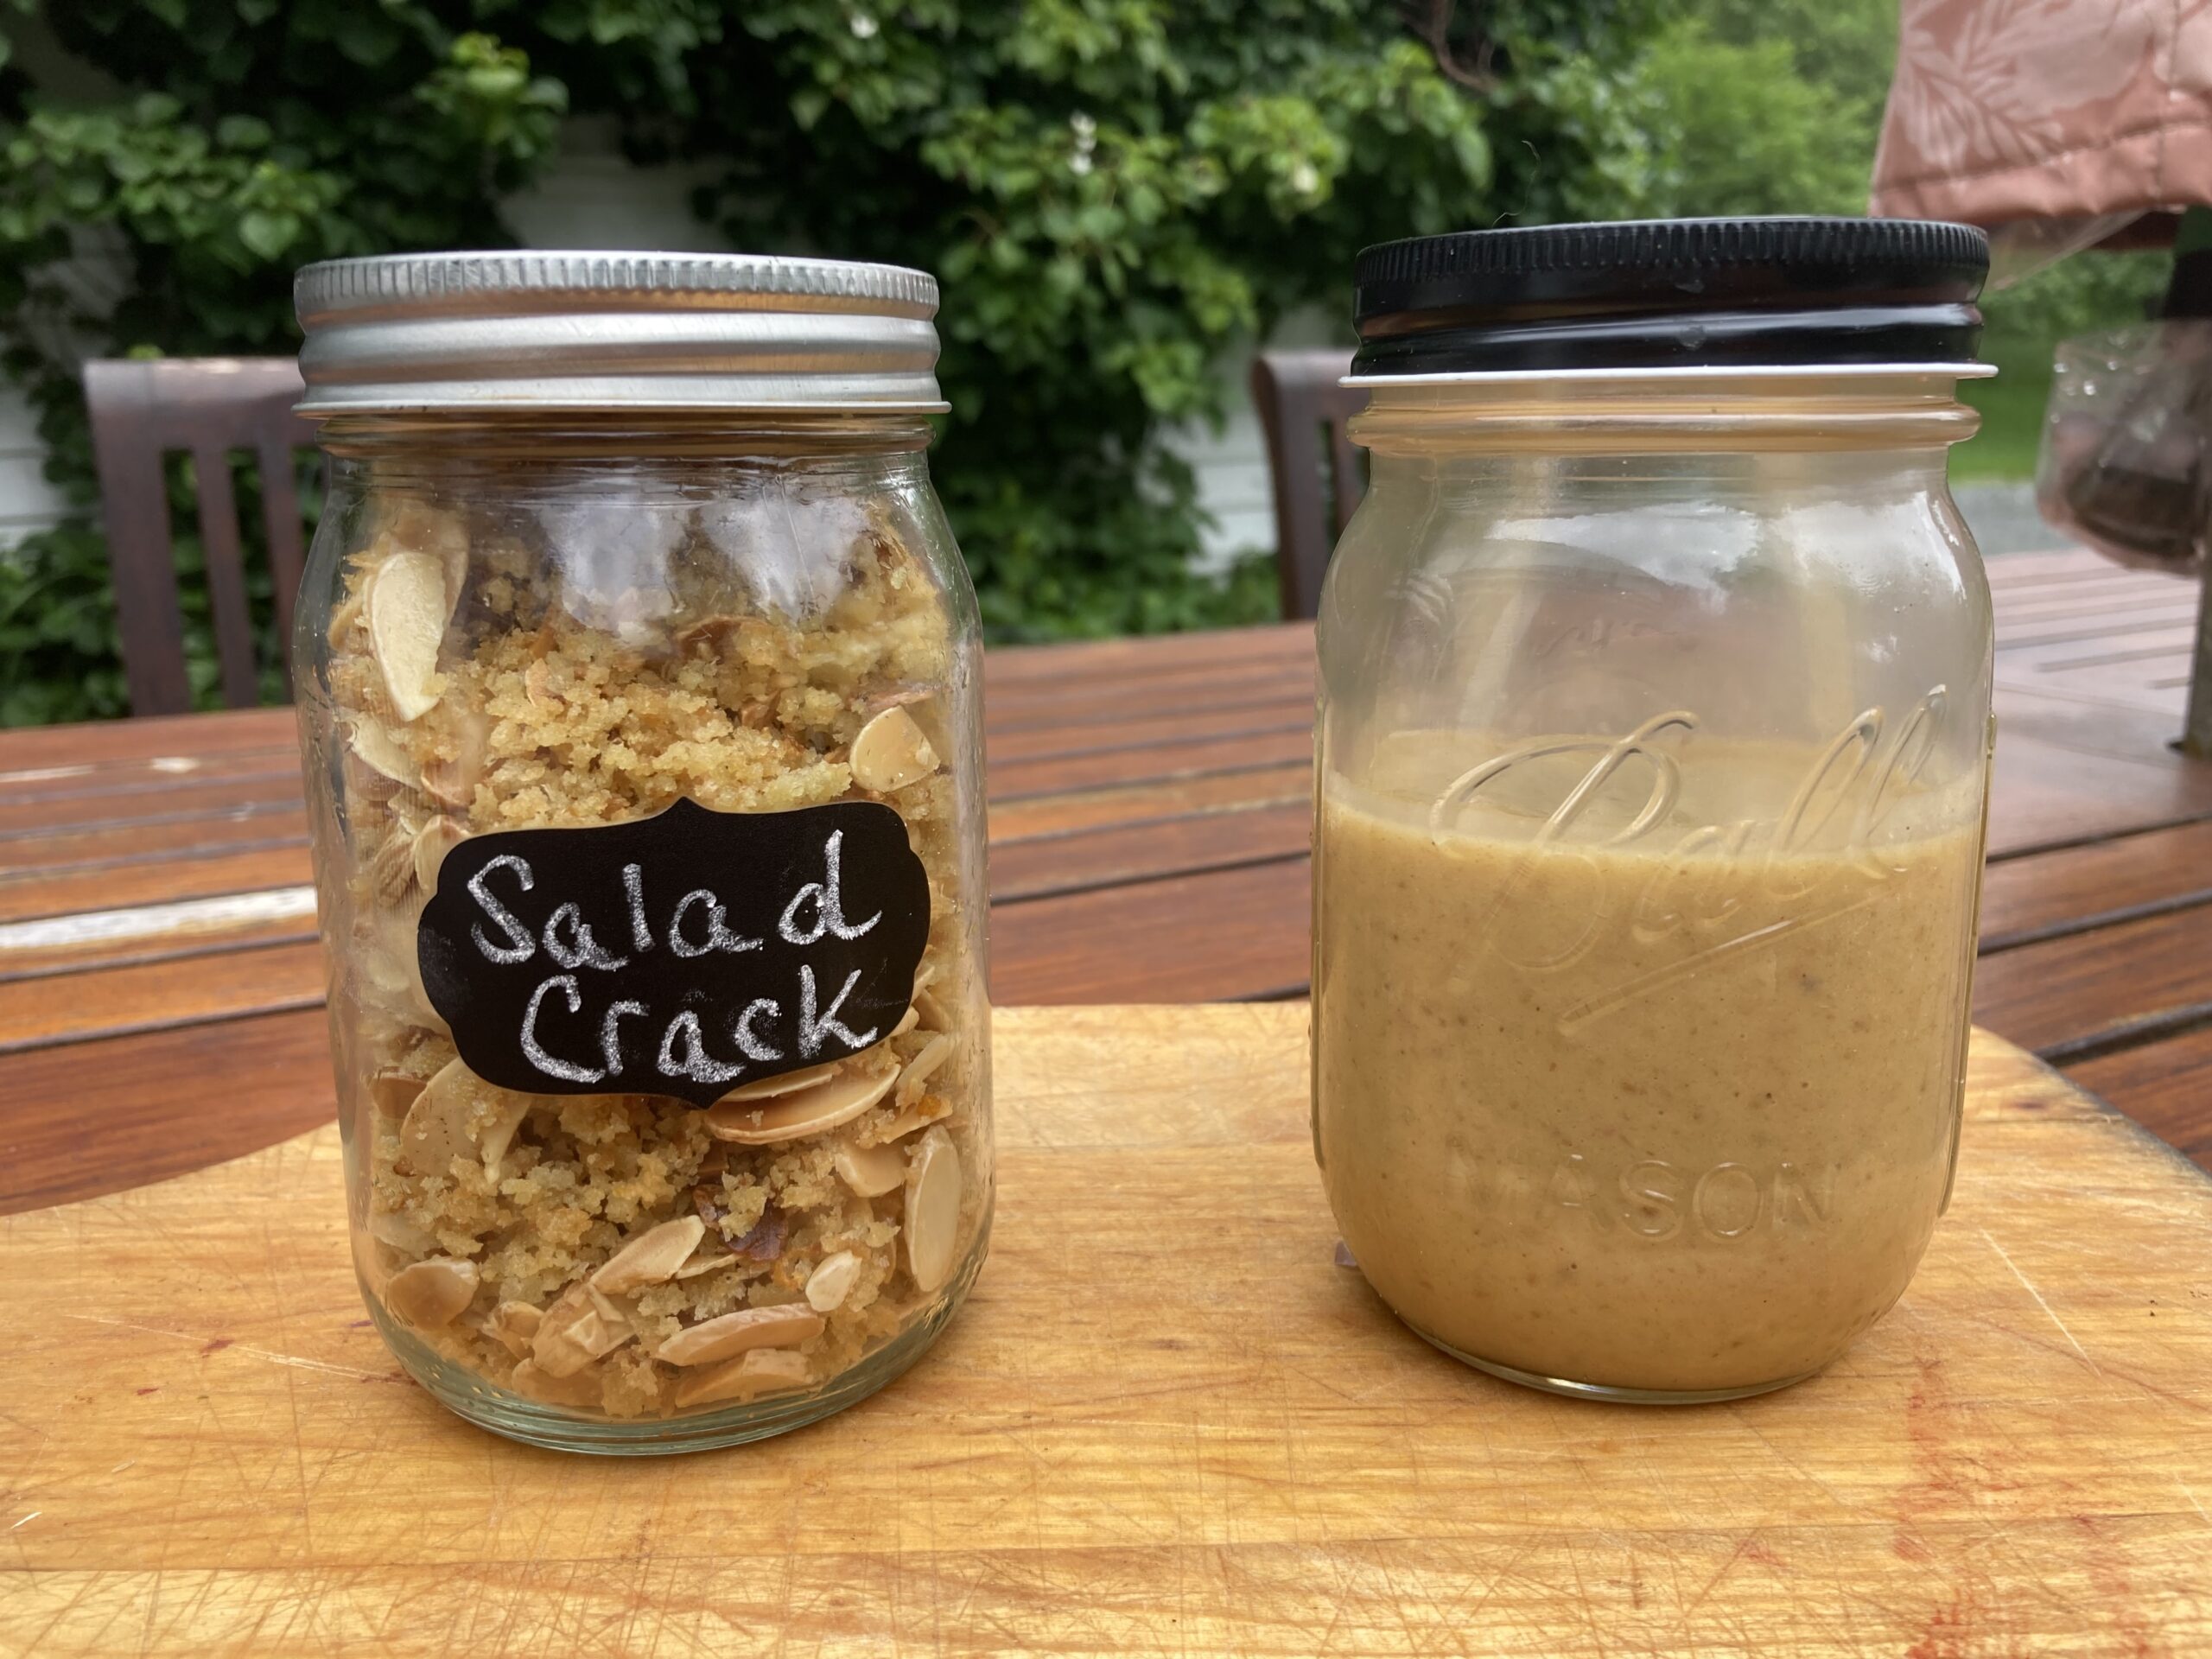 Mason Jar Salad for Meal Prep + A Killer Clean Honey Mustard Dressing!